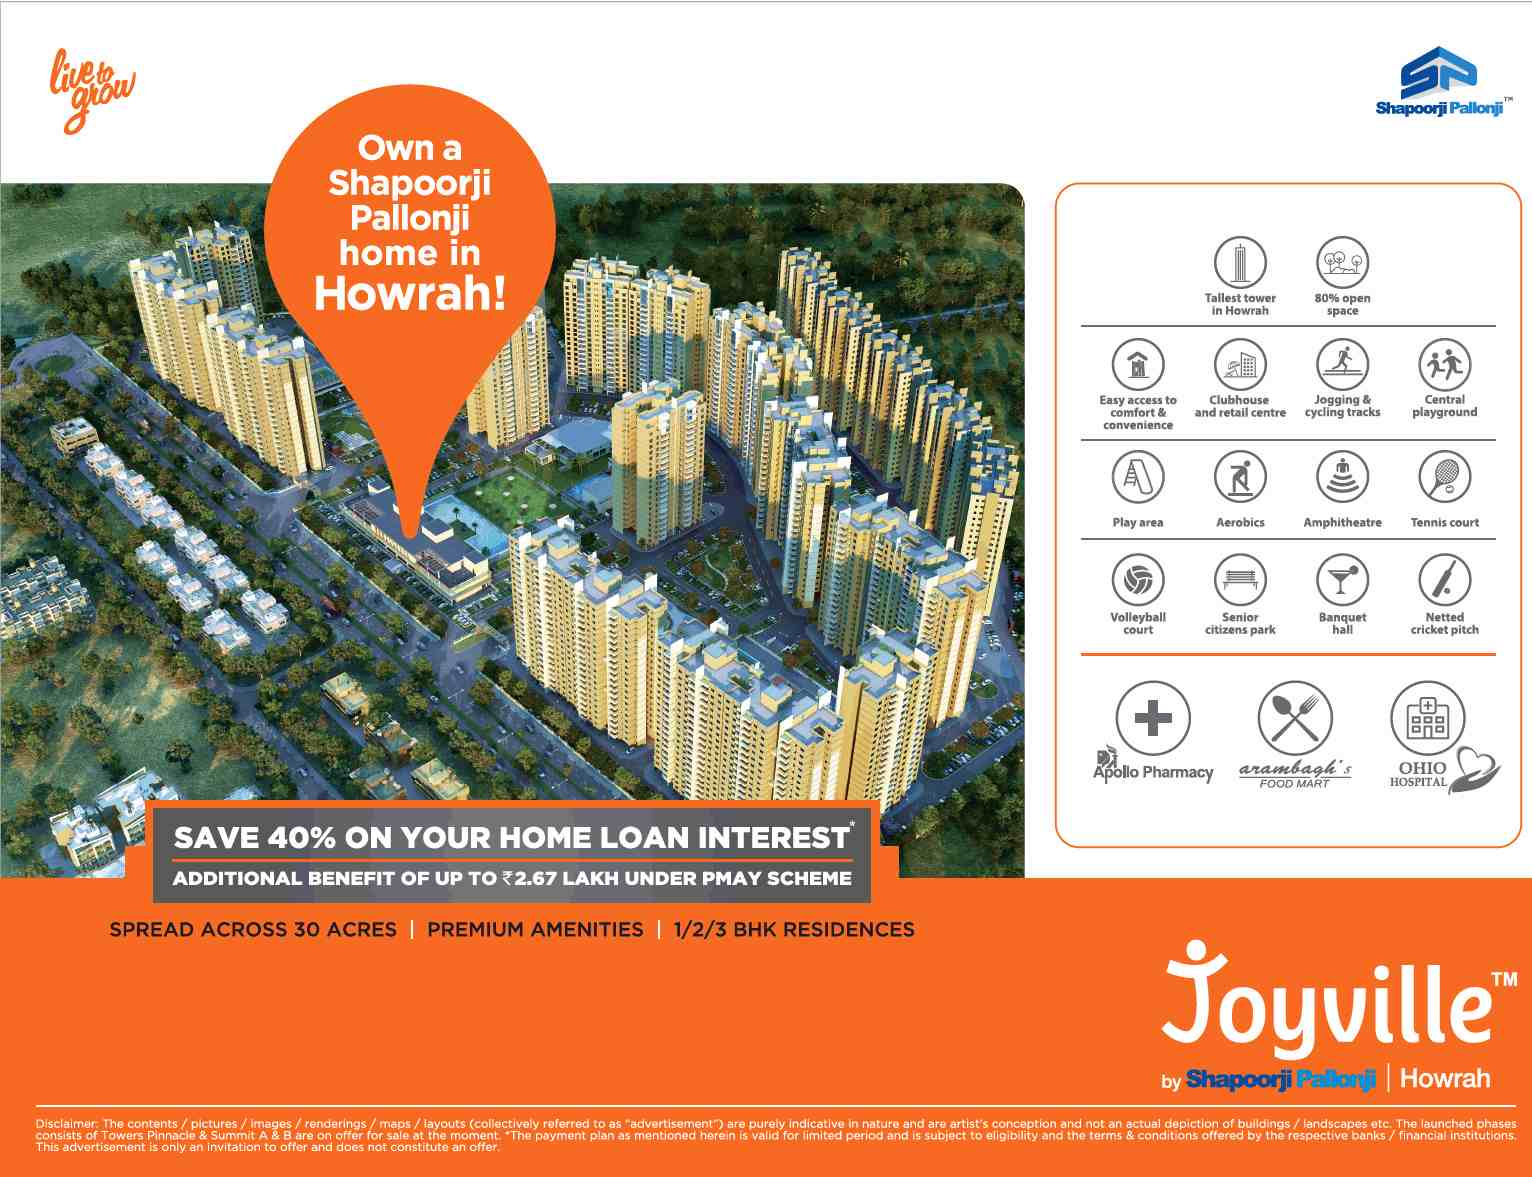 Save 40% on your home loan interest at Shapoorji Pallonji Joyville in Mumbai